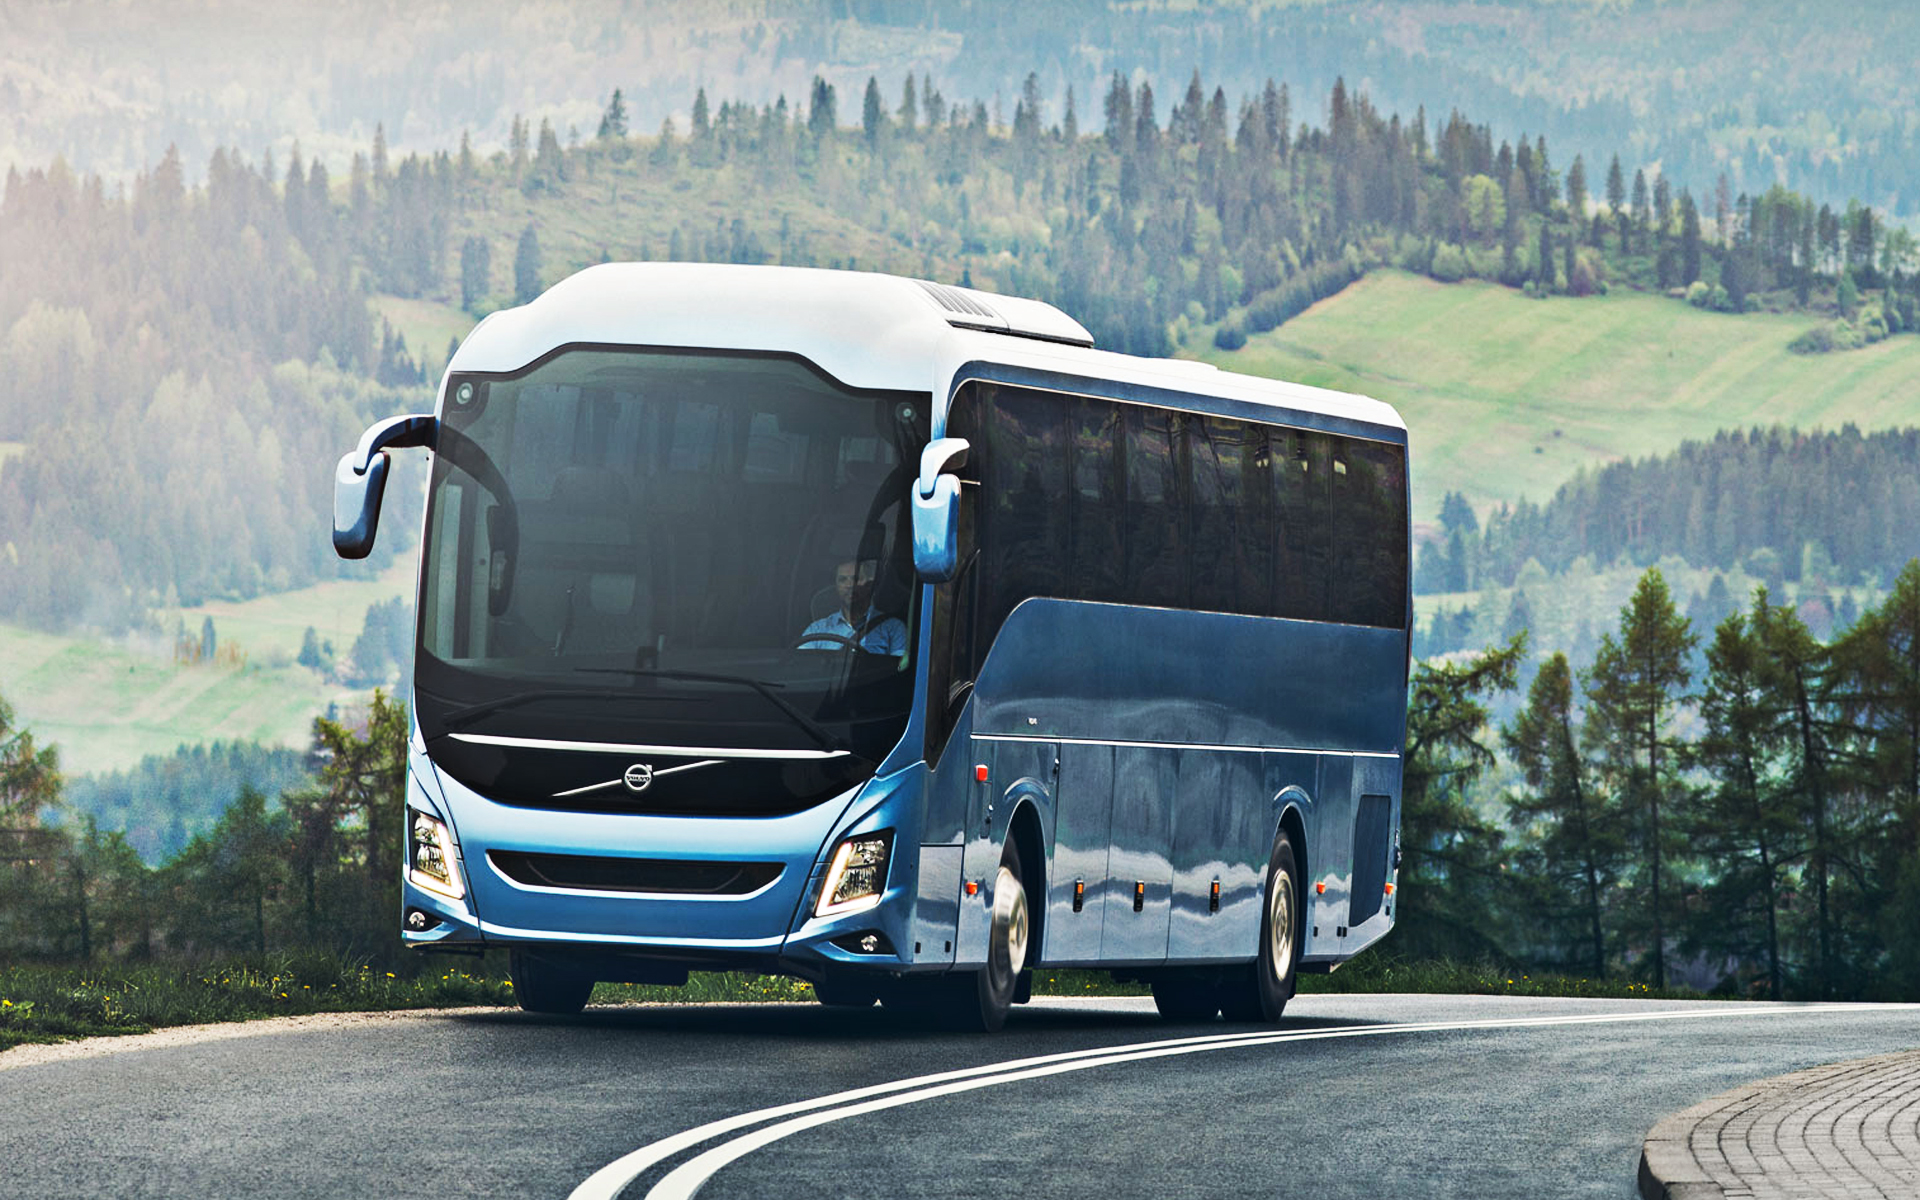 Volvo 9900, 2019, New Bus, Passenger Bus, Highway, - Volvo 9900 Bus 2019 - HD Wallpaper 